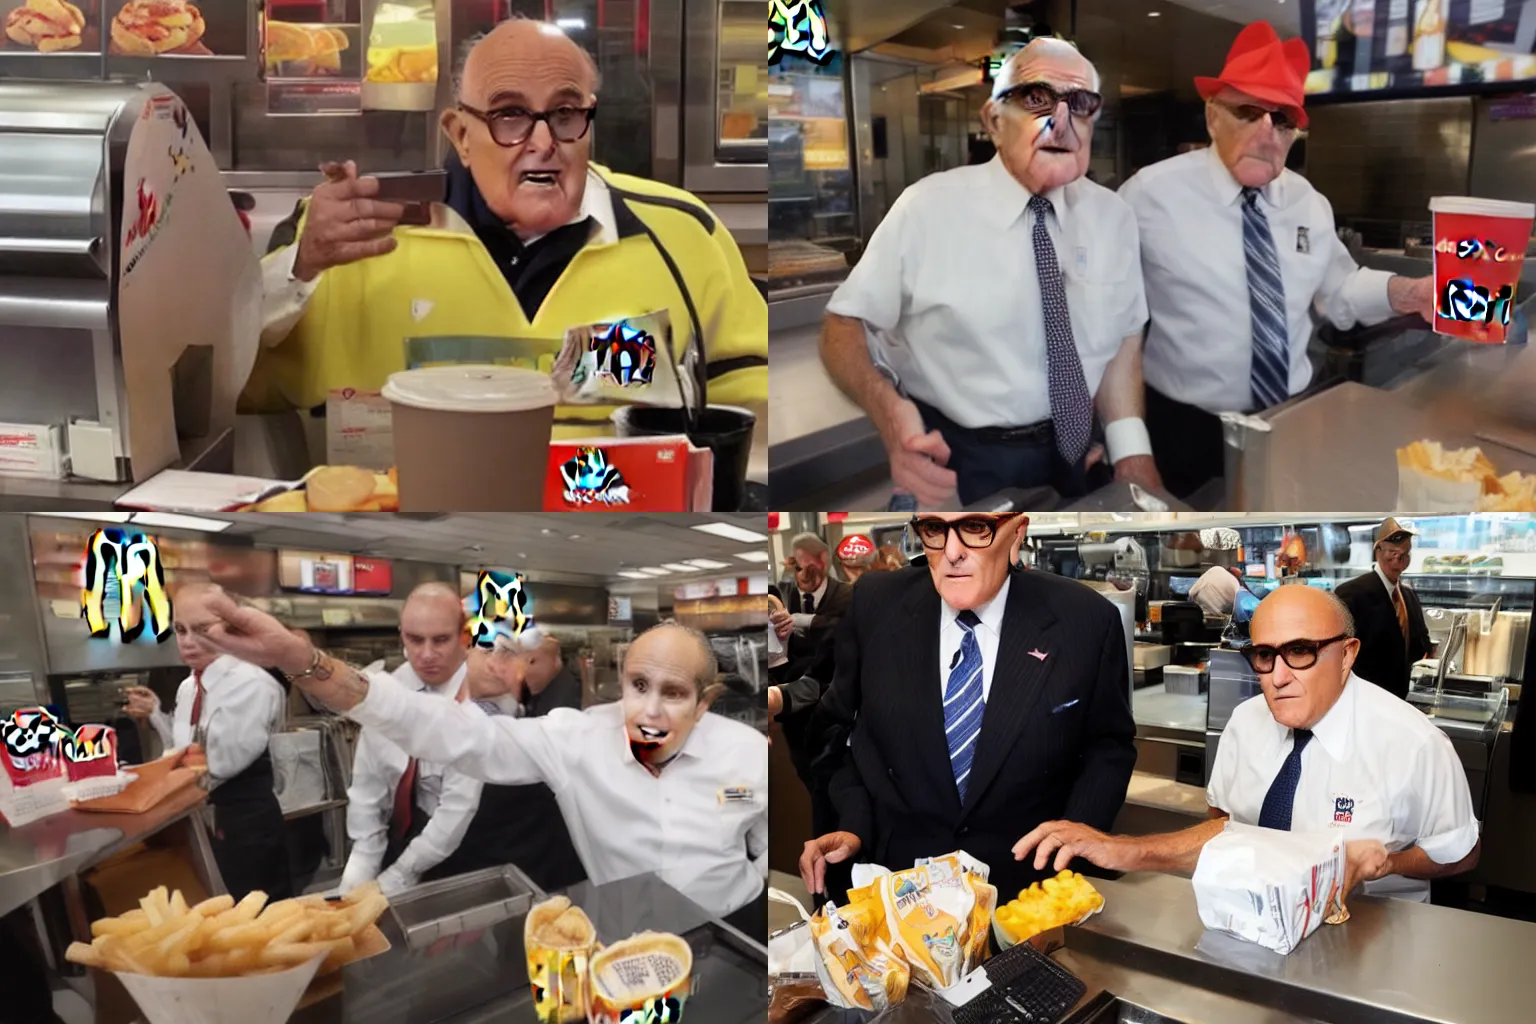 Prompt: Rudy Giuliani working at McDonalds